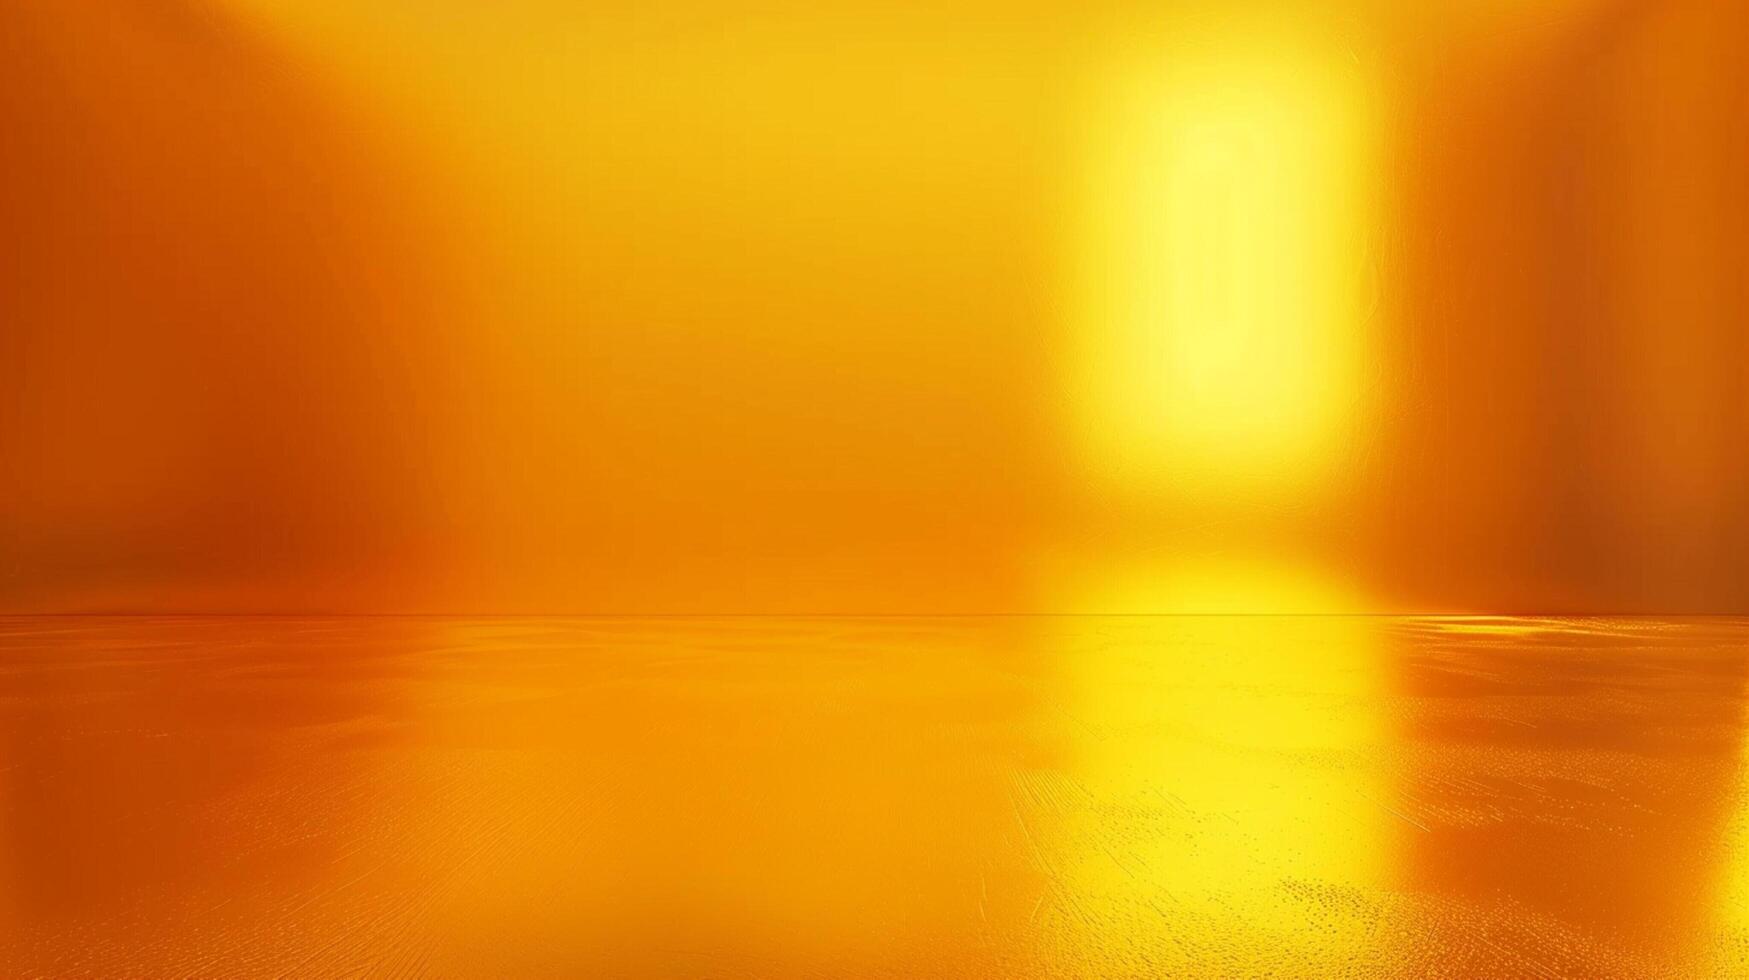 abstract luxury gold yellow gradient studio wall photo